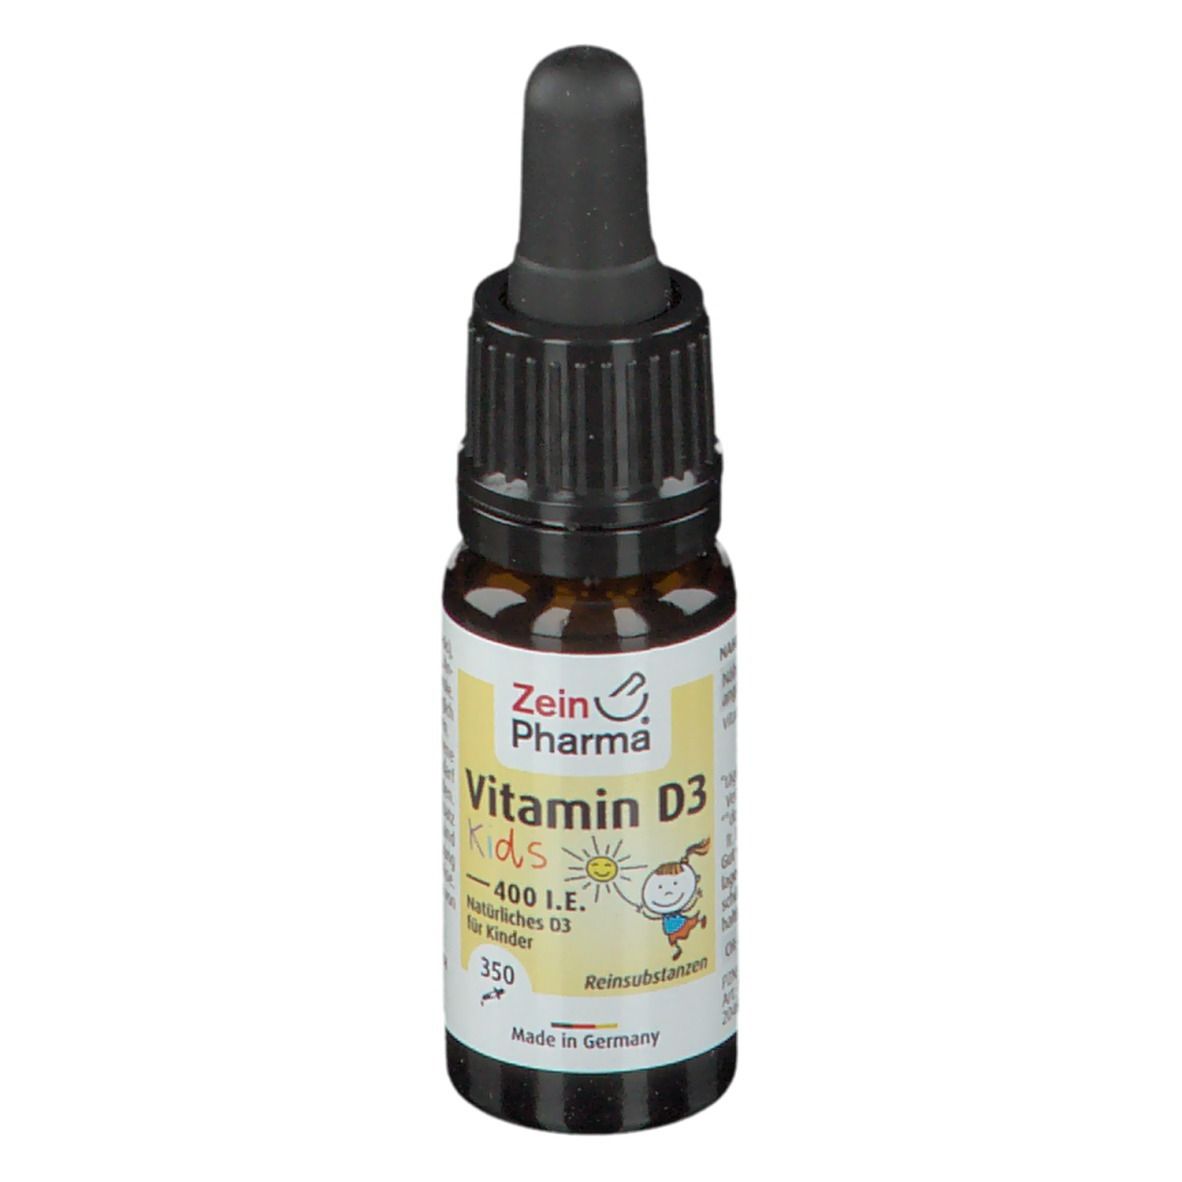 ZeinPharma® Vitamin D3 Kids 400 I.E.®